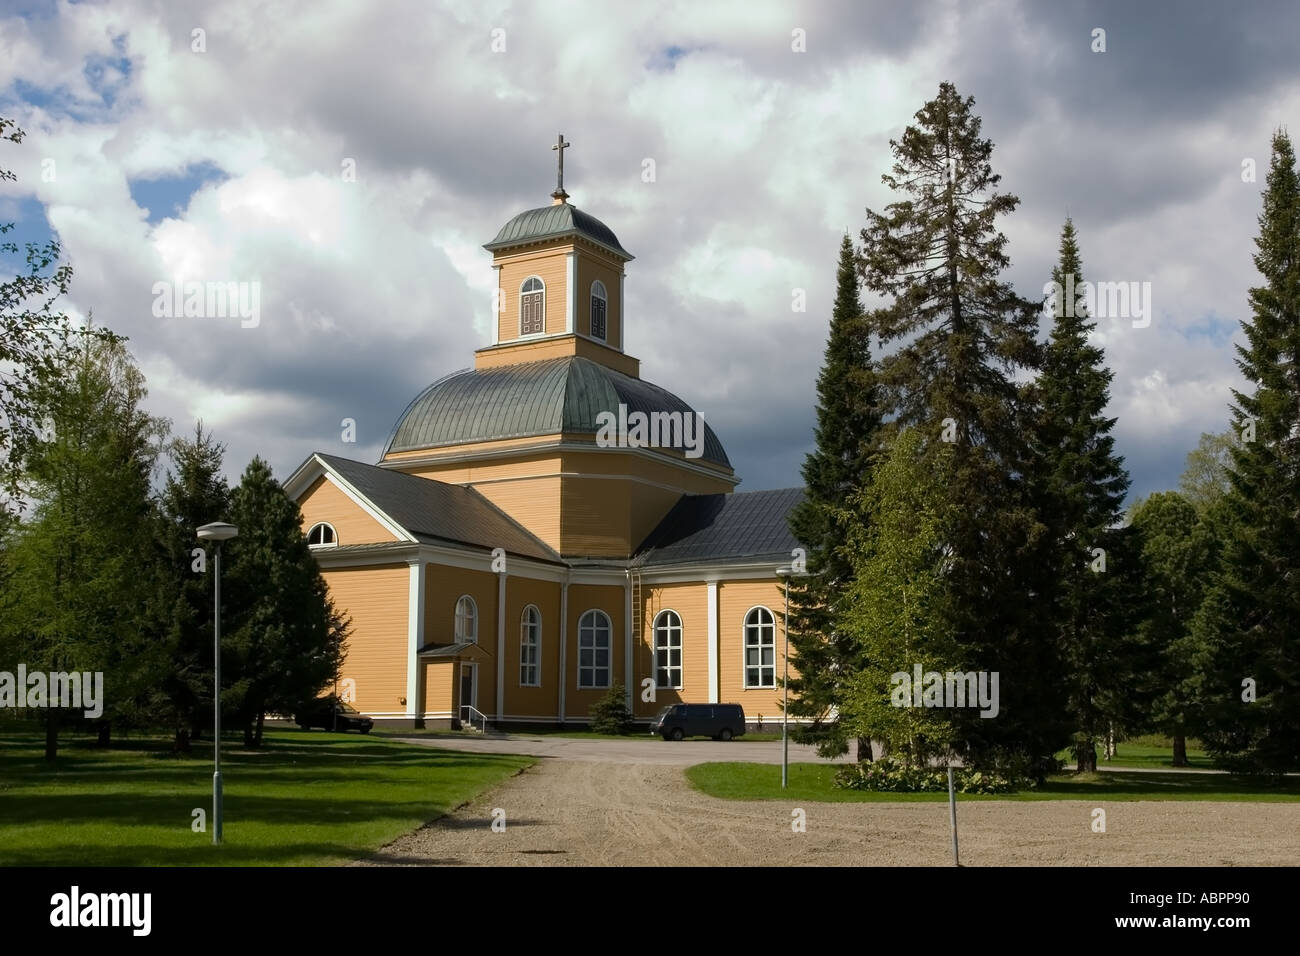 Wooden church of Kuhmo Finland Stock Photo